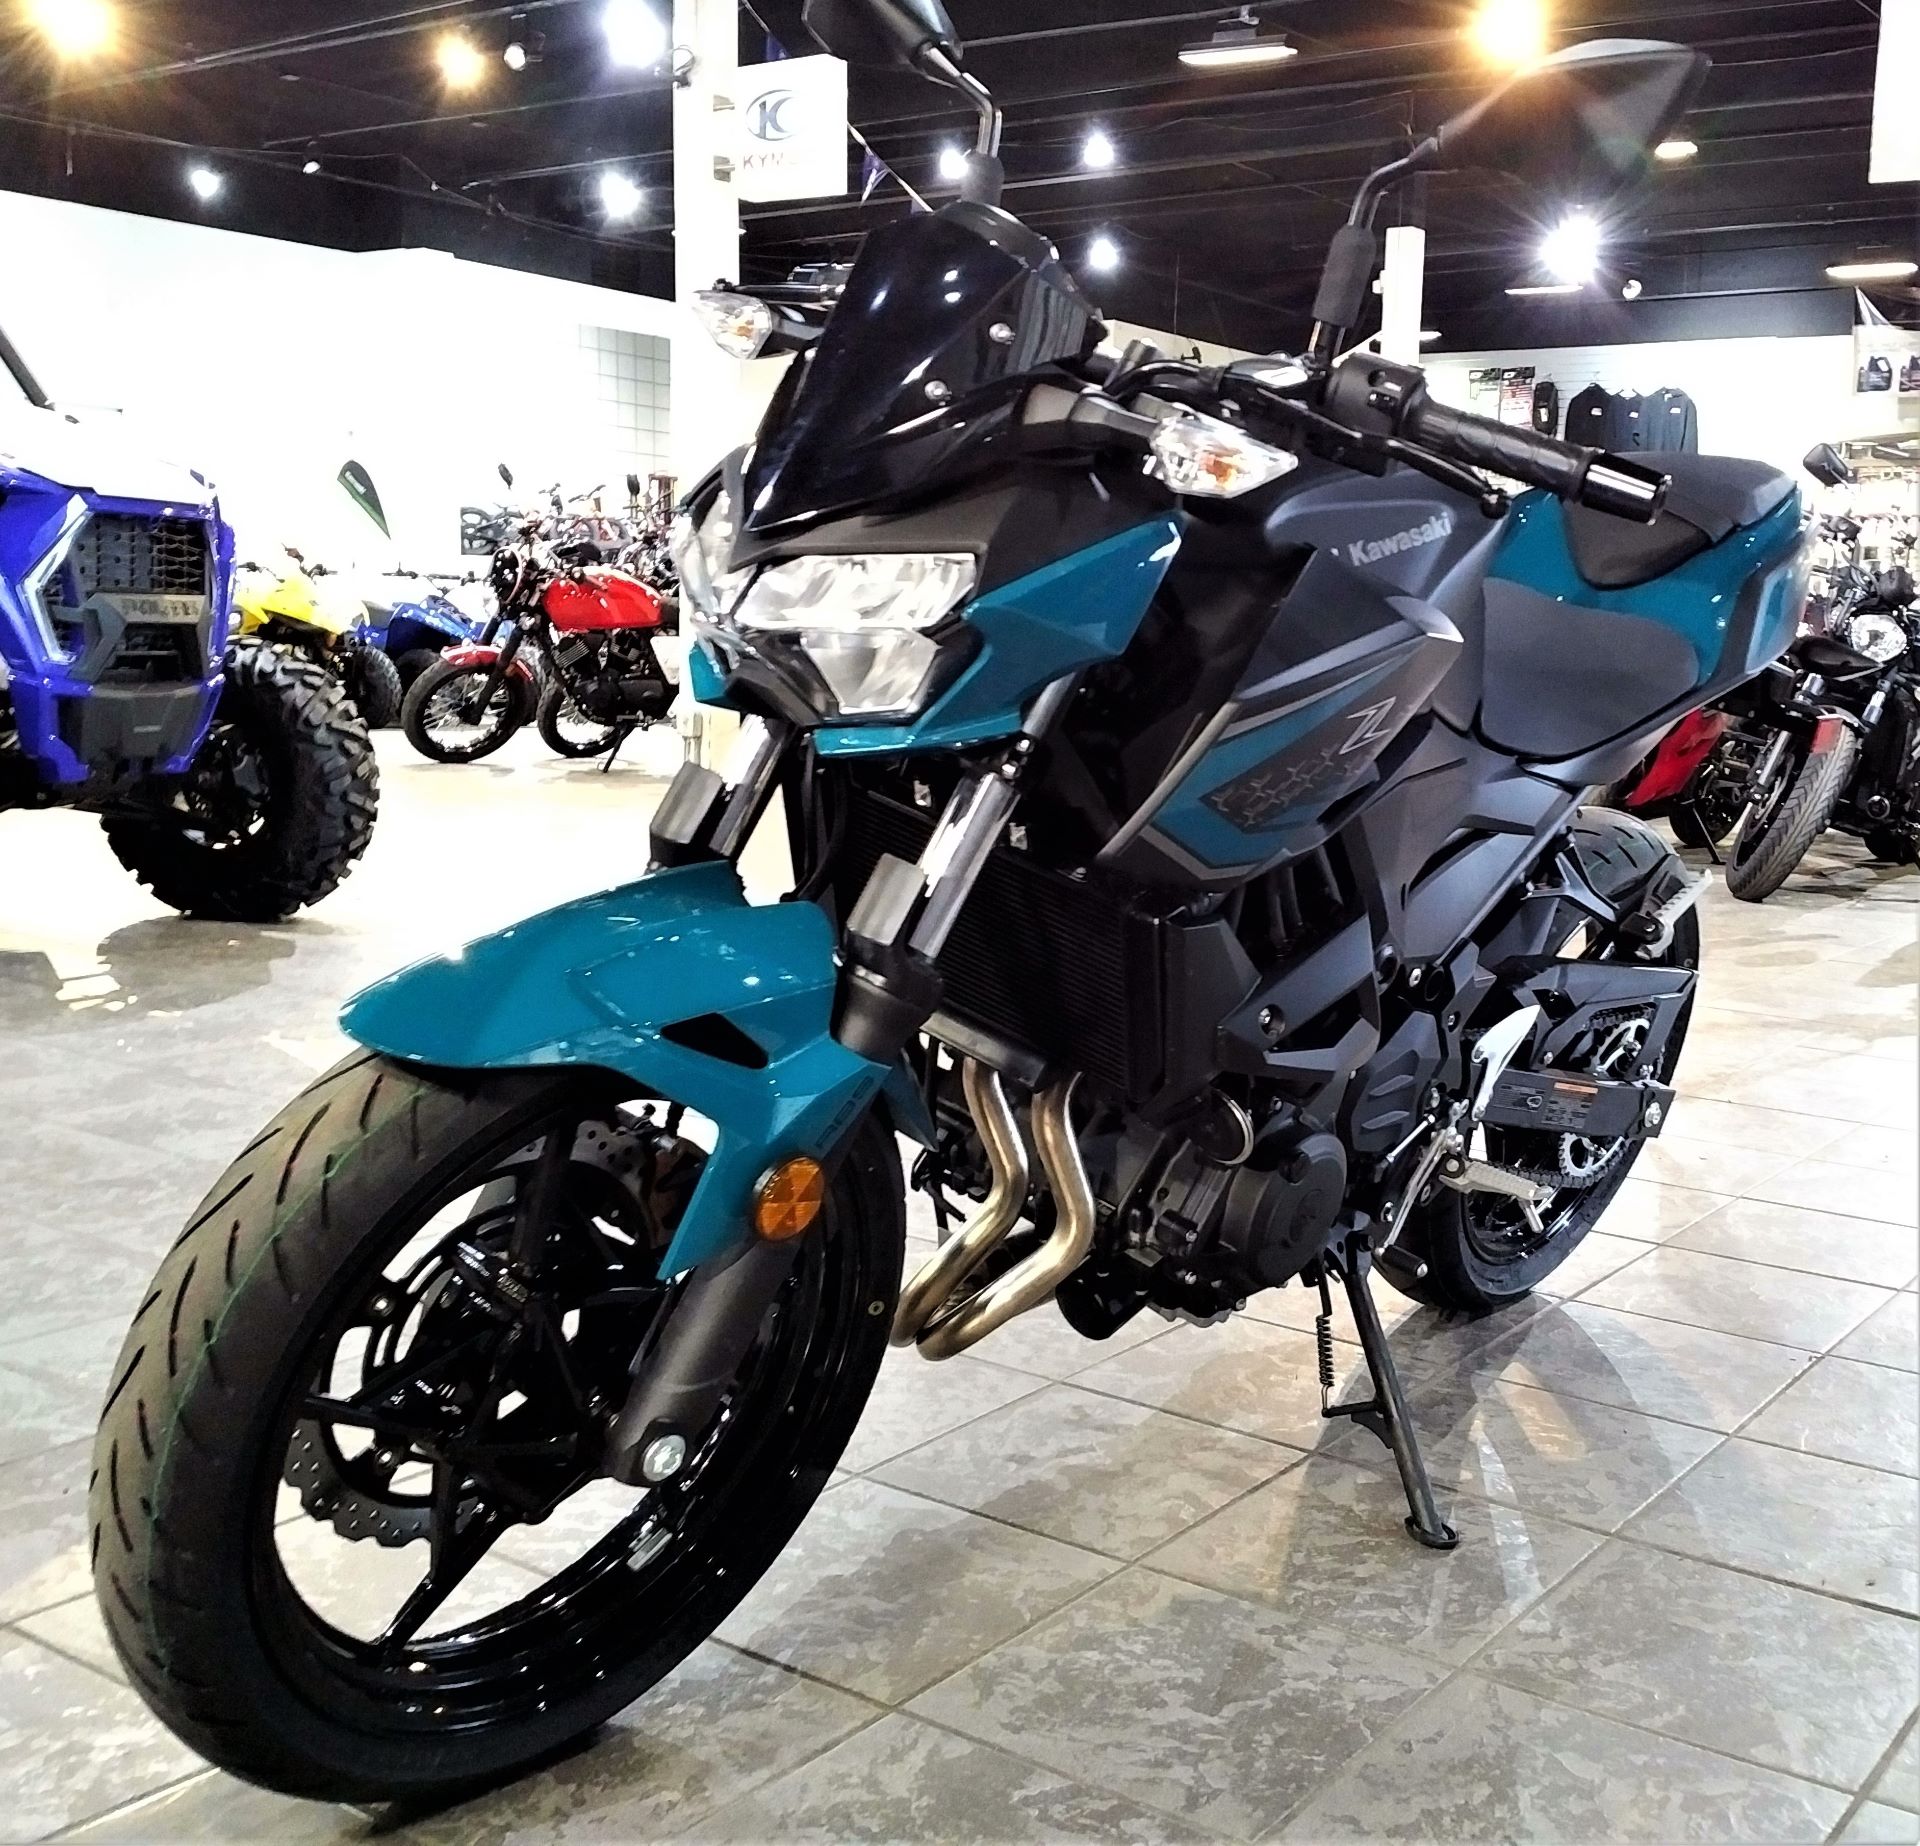 New 2021 Kawasaki ABS powersports in Salinas, CA | Number: 25242 | salinasmc.com